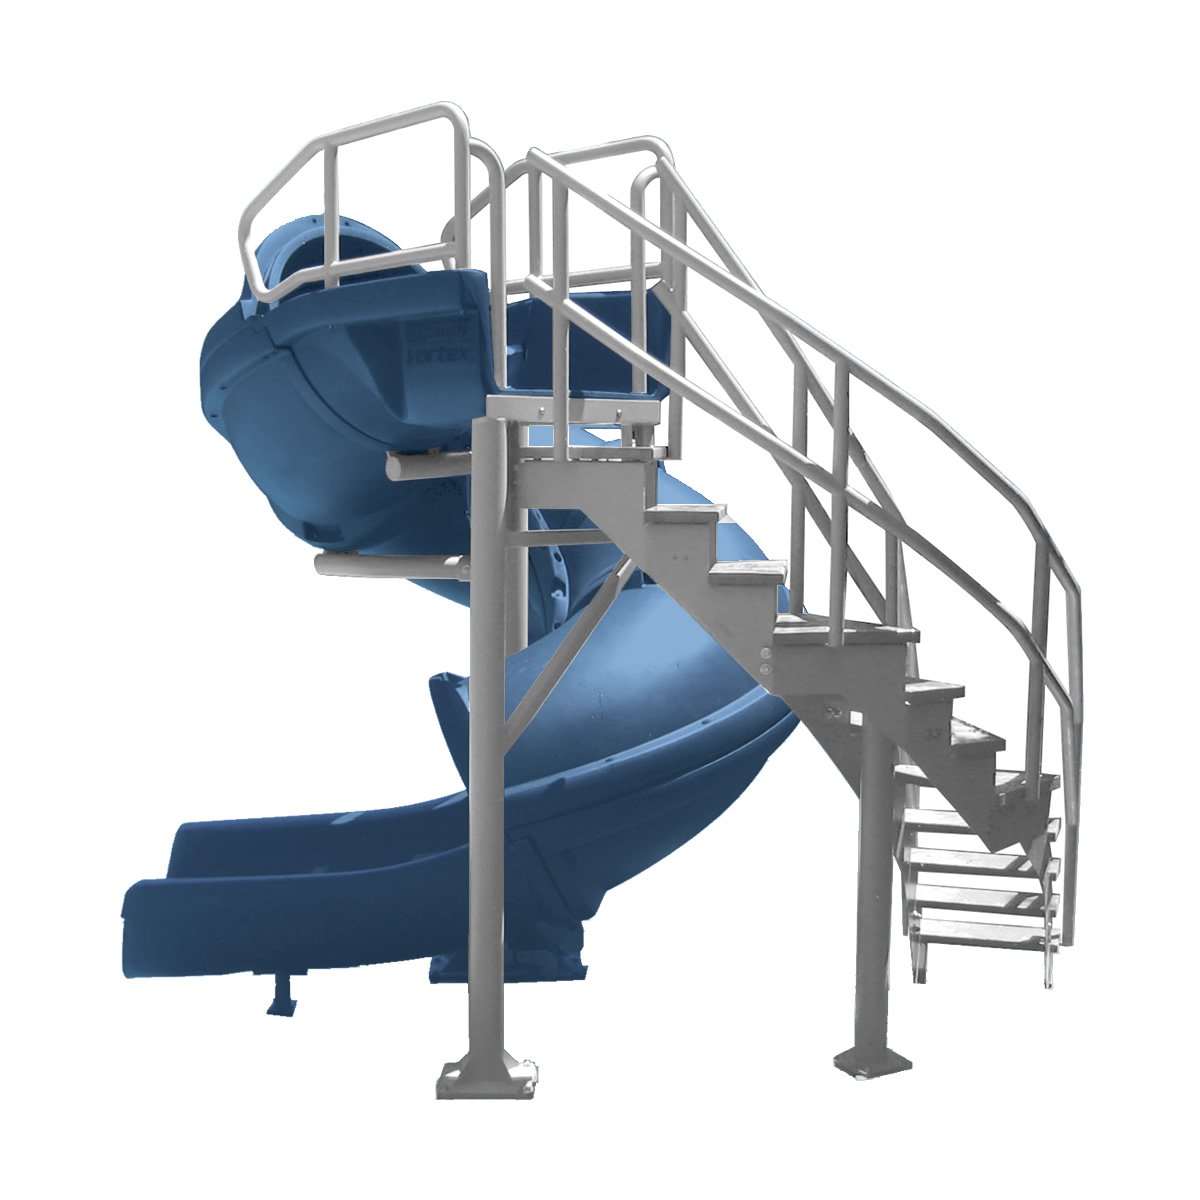 Vortex Half Tube Pool Slide with Staircase